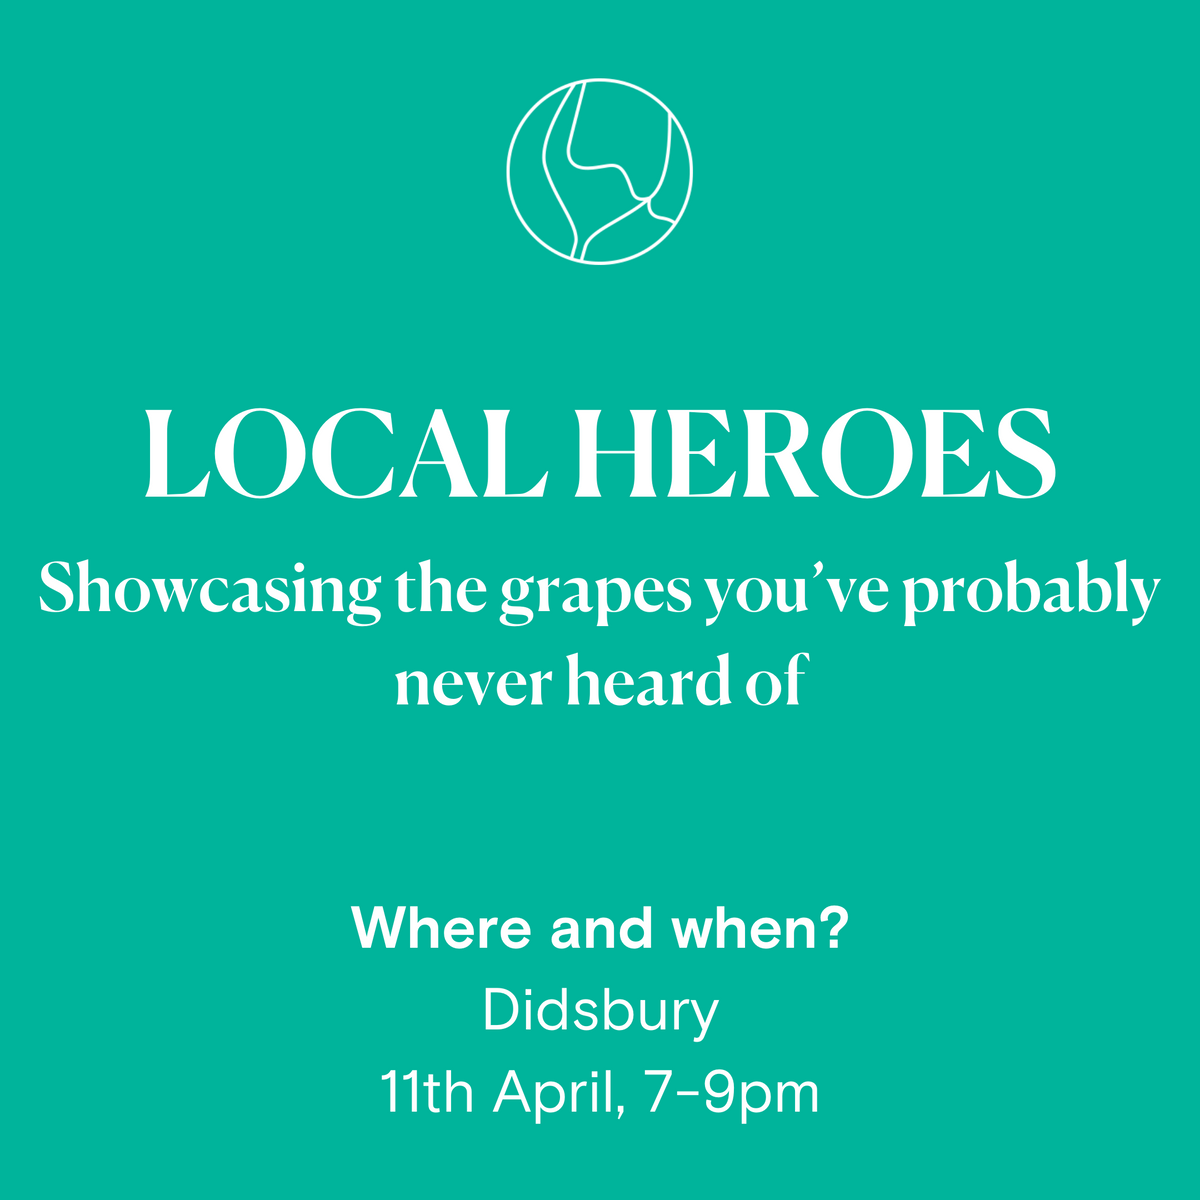 Local Heroes Wine Tasting at Didsbury, 11th April